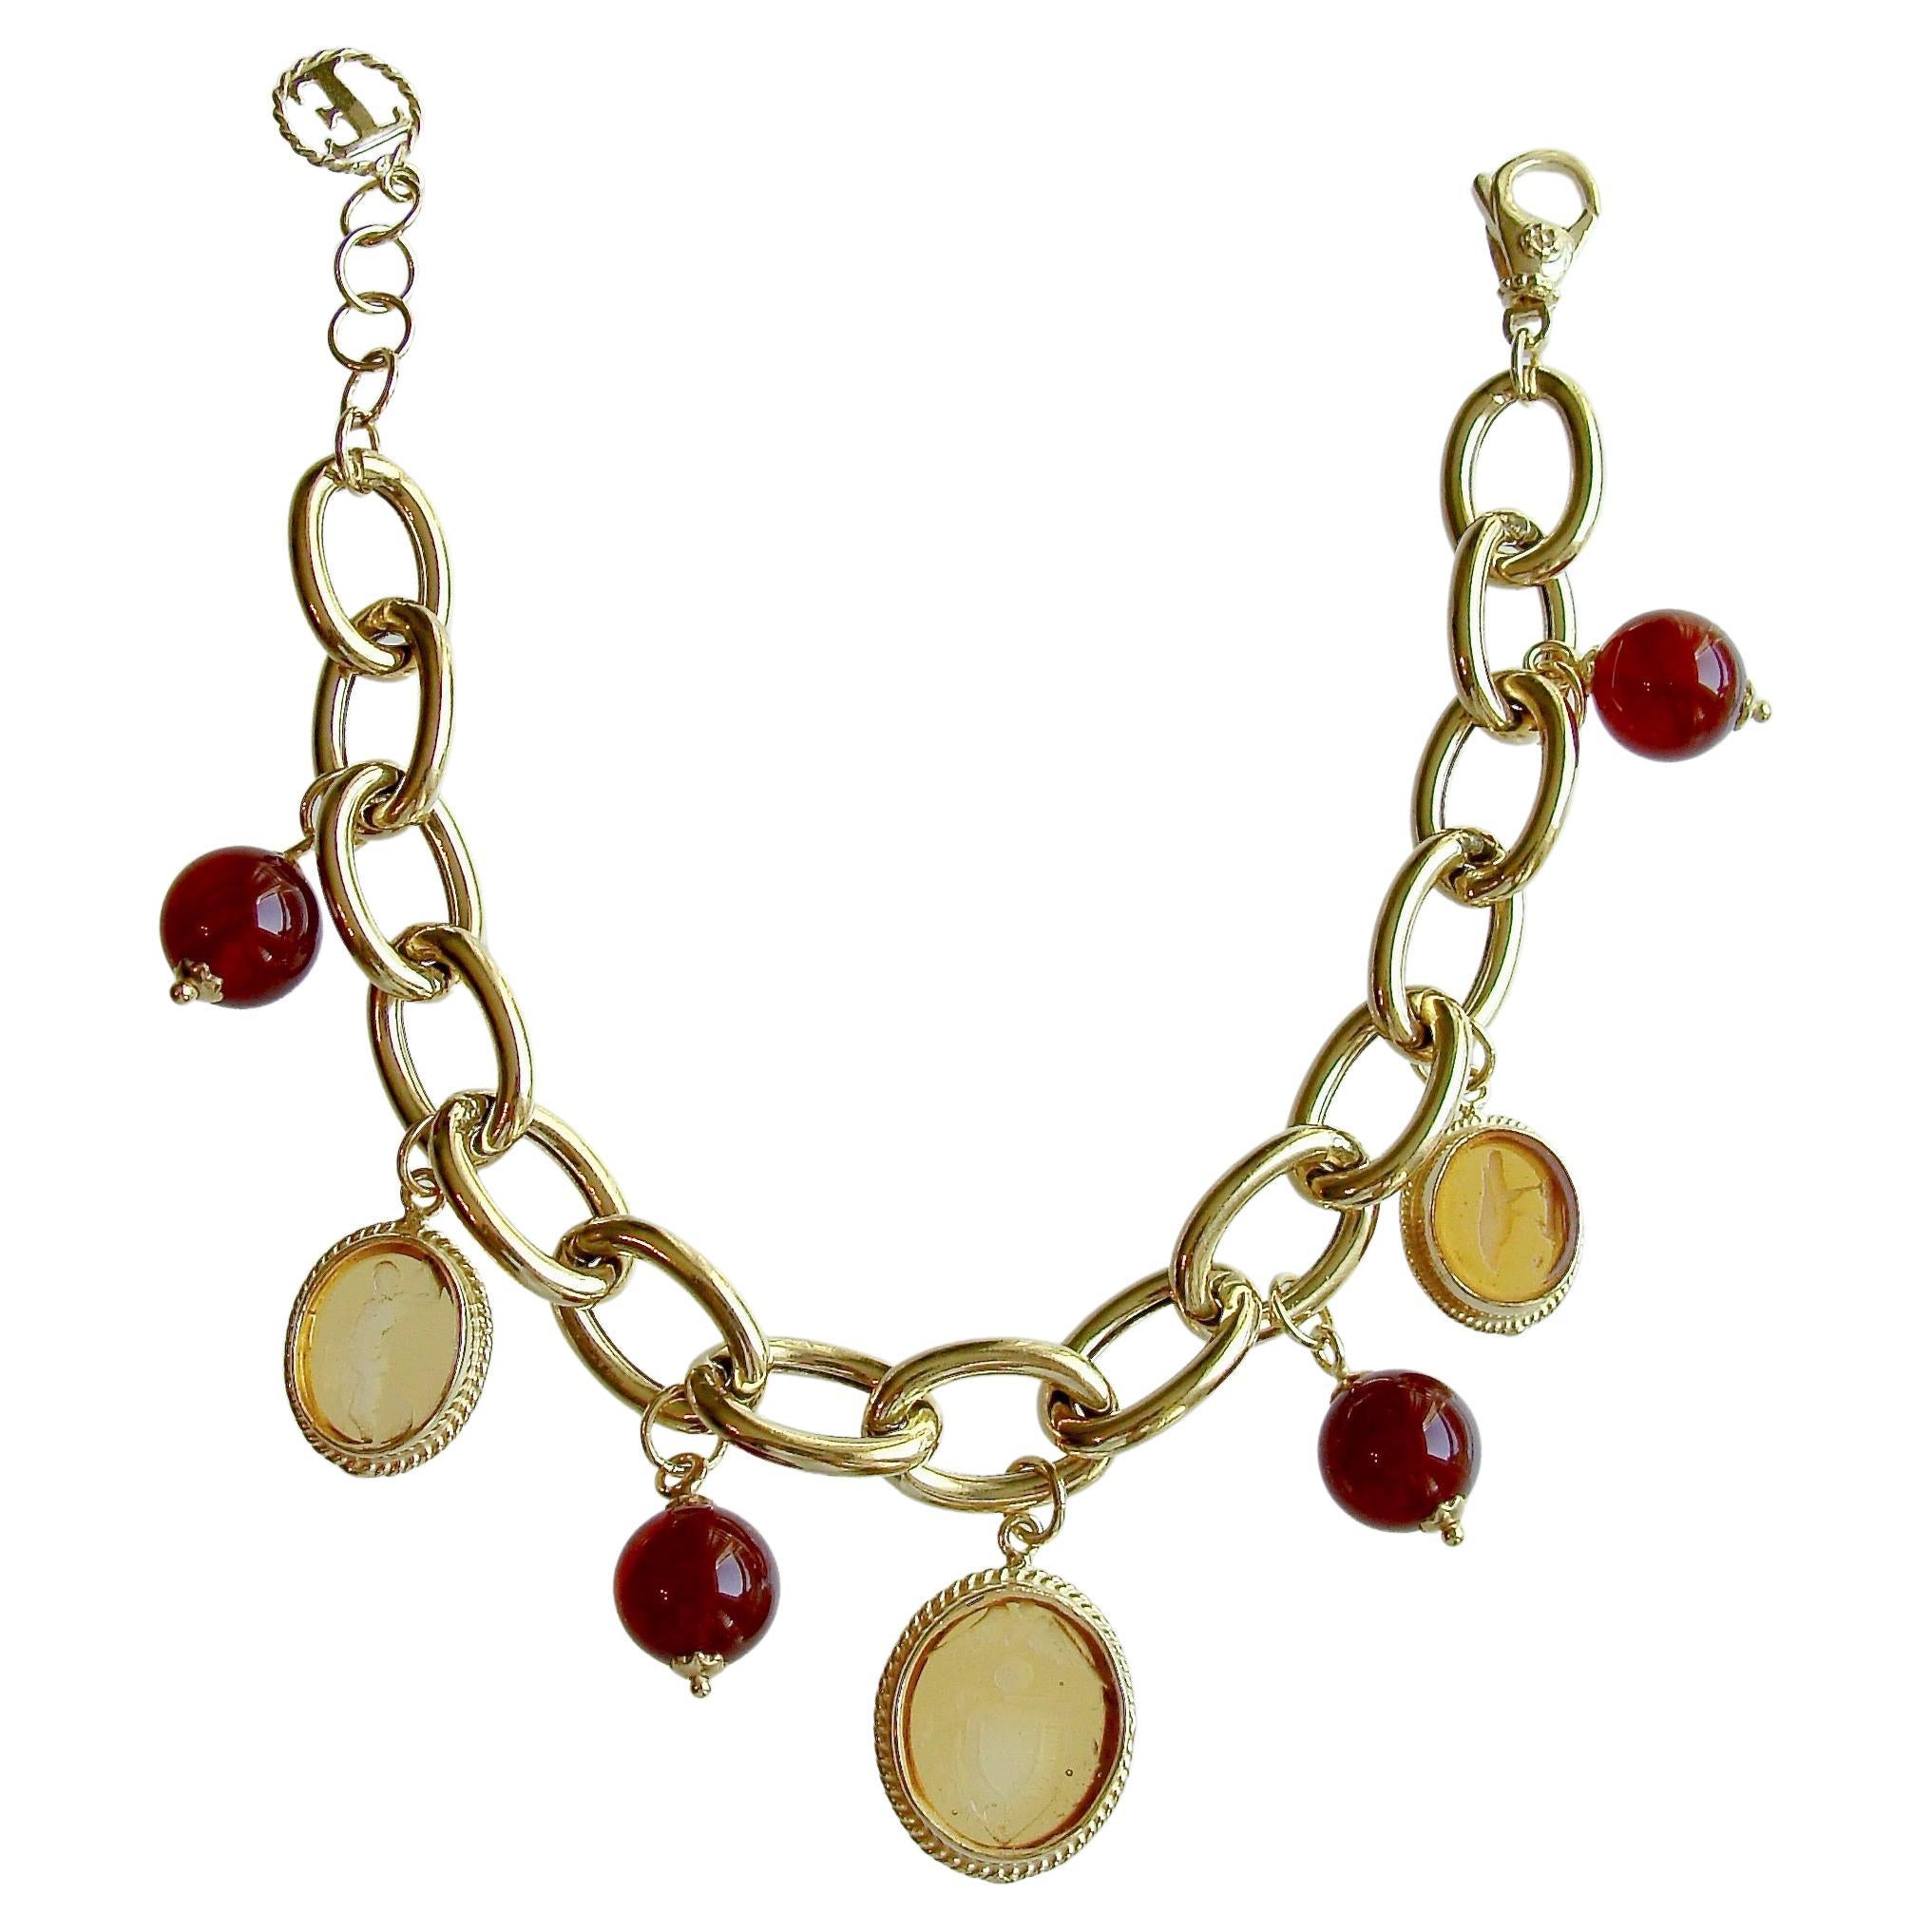 Gold Intaglios and Carnelian Charm Bracelet with Adjustable Clasp - Piedmont Bra